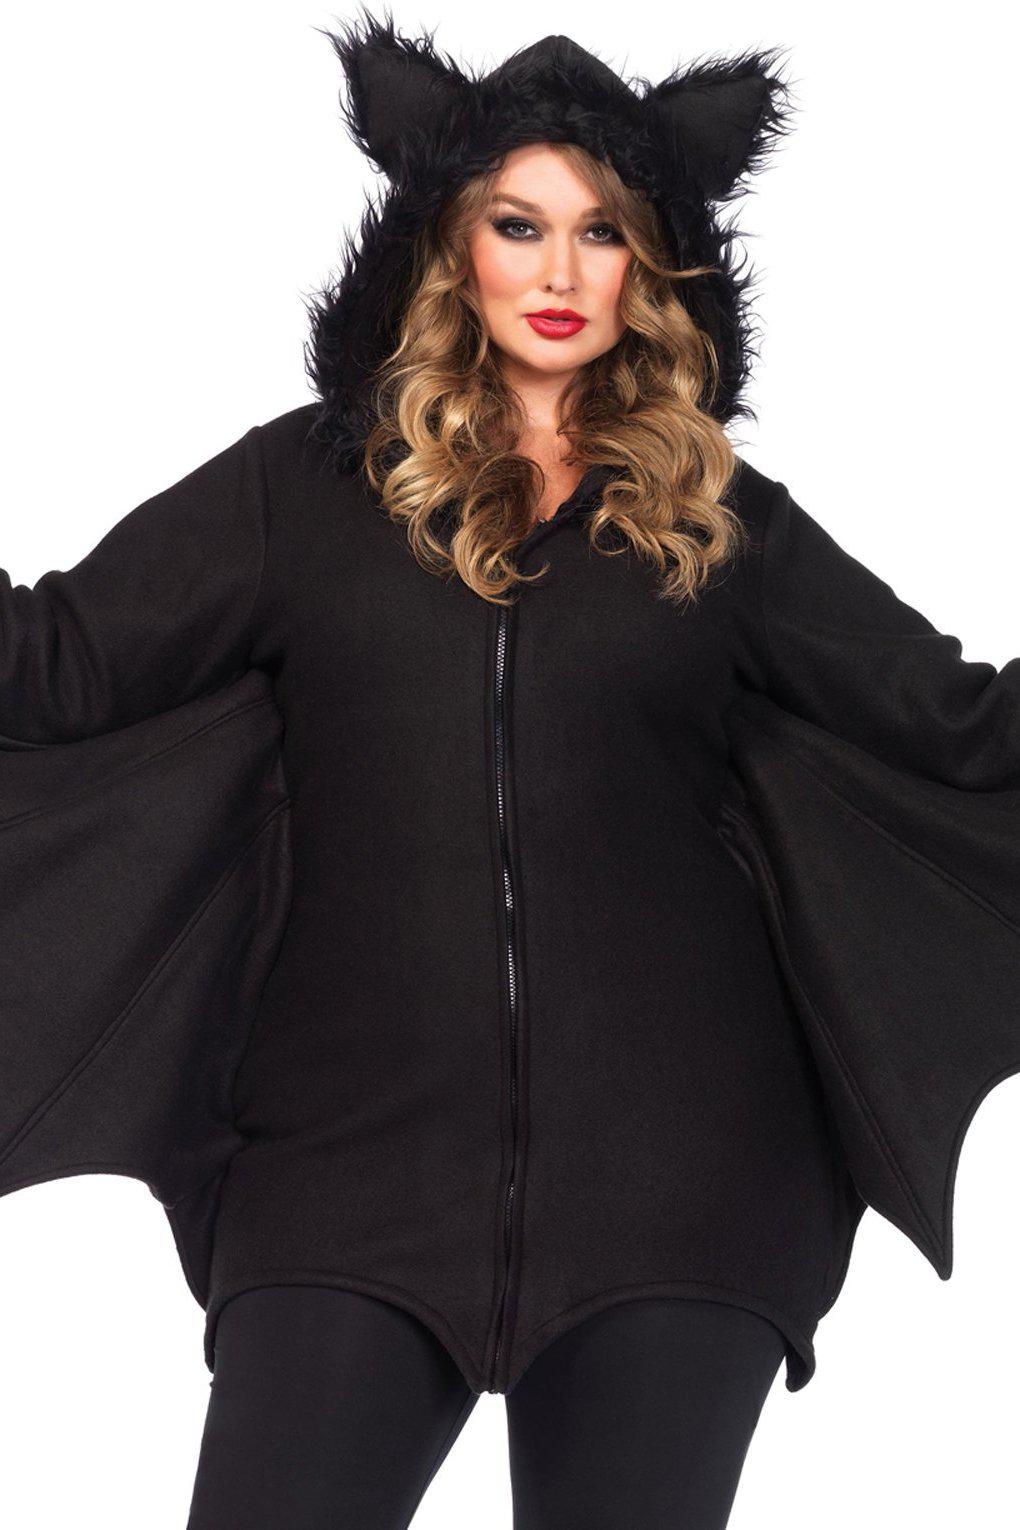 Plus Size Sexy Bat Costume Dress-Animal Costumes-Leg Avenue-Black-1/2XL-SEXYSHOES.COM